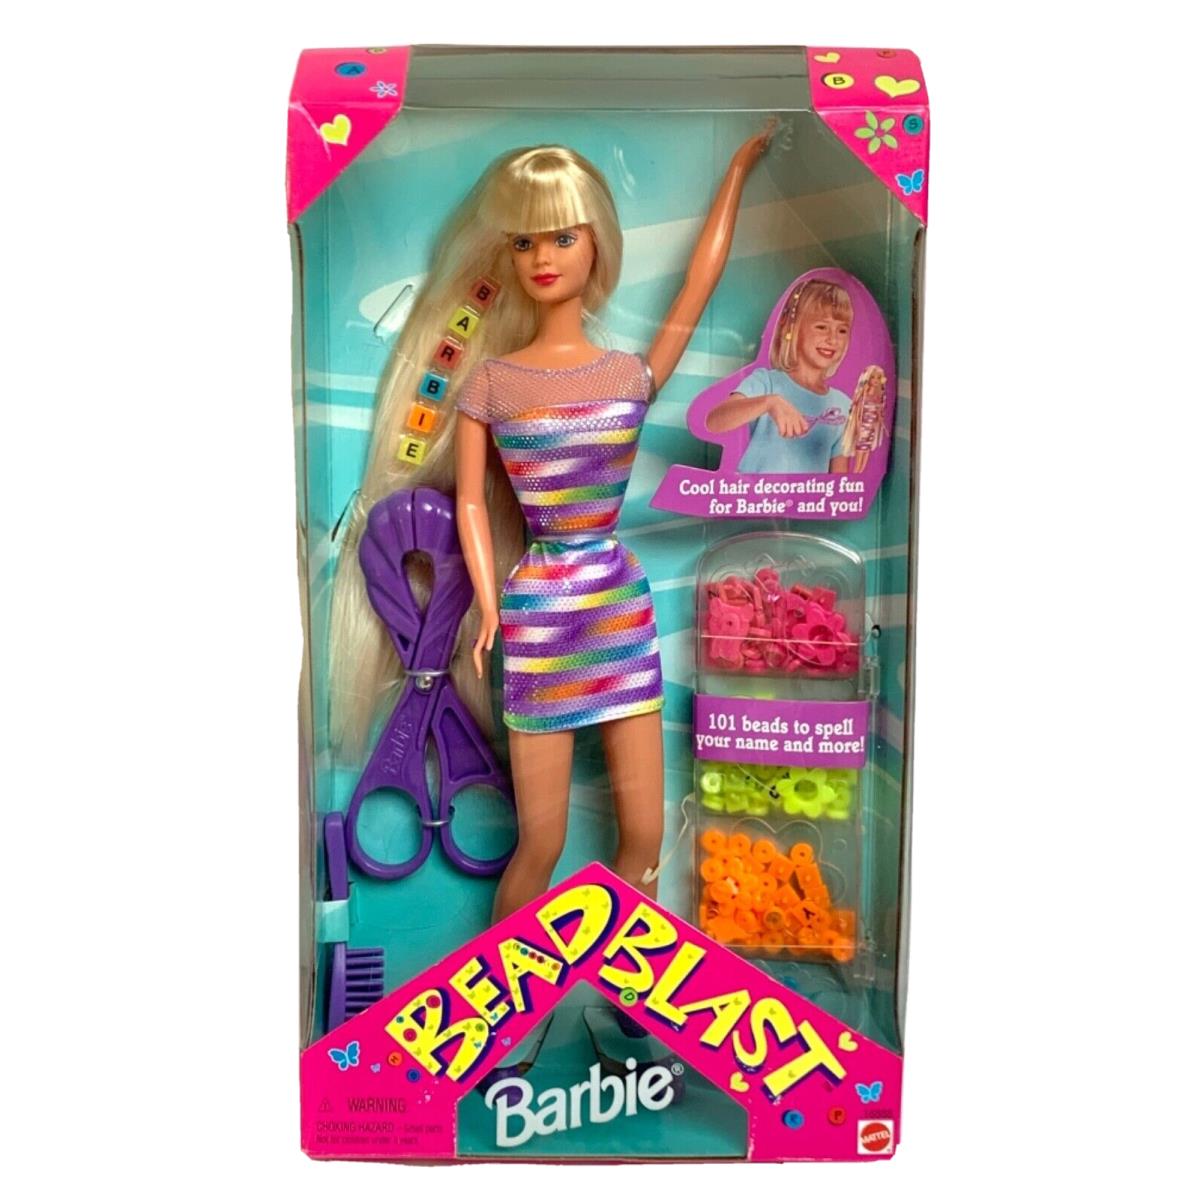 Bead Blast Barbie Vintage Mattel 1997 Made In Indonesia